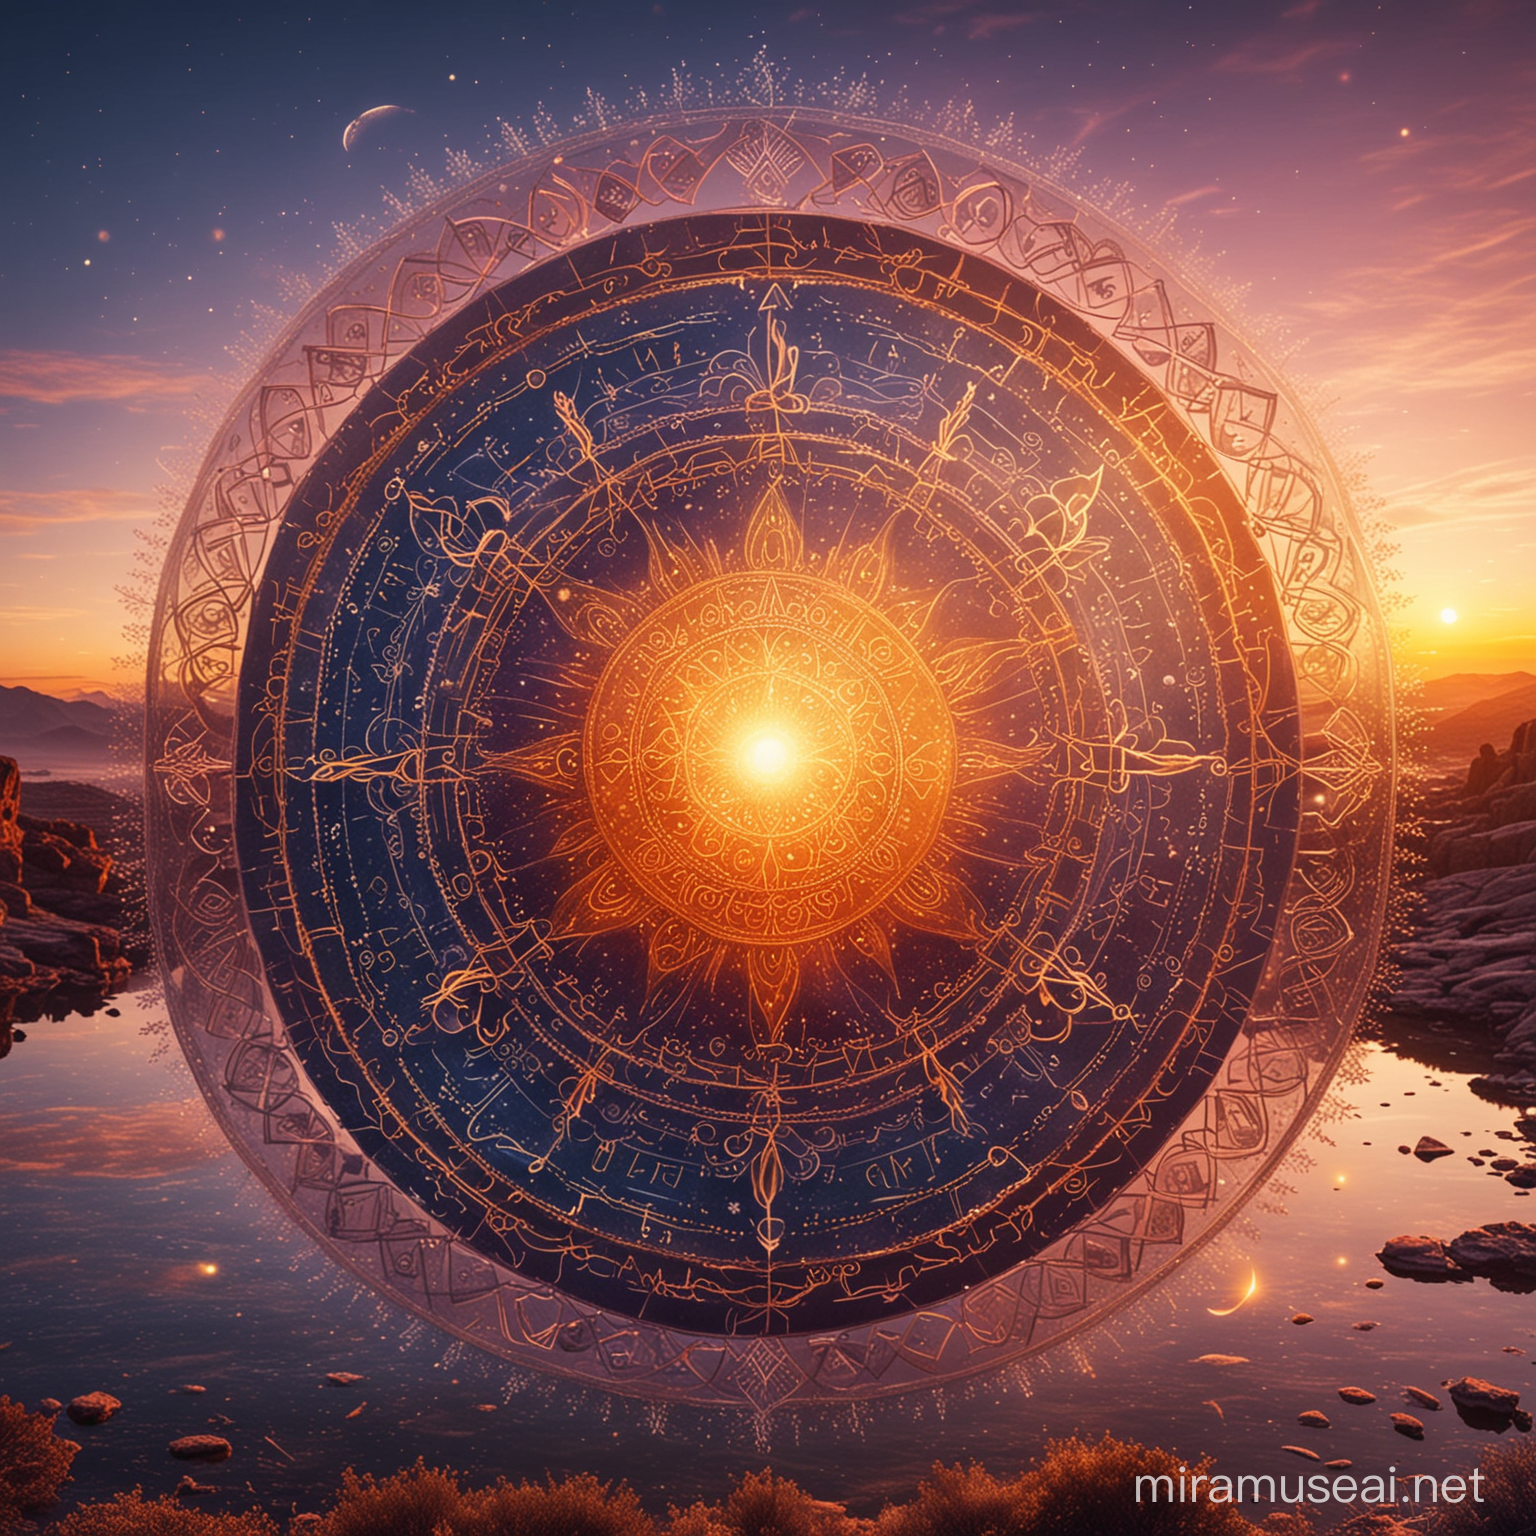 Enchanting Mandala of Celestial Signs in Mystical Sky